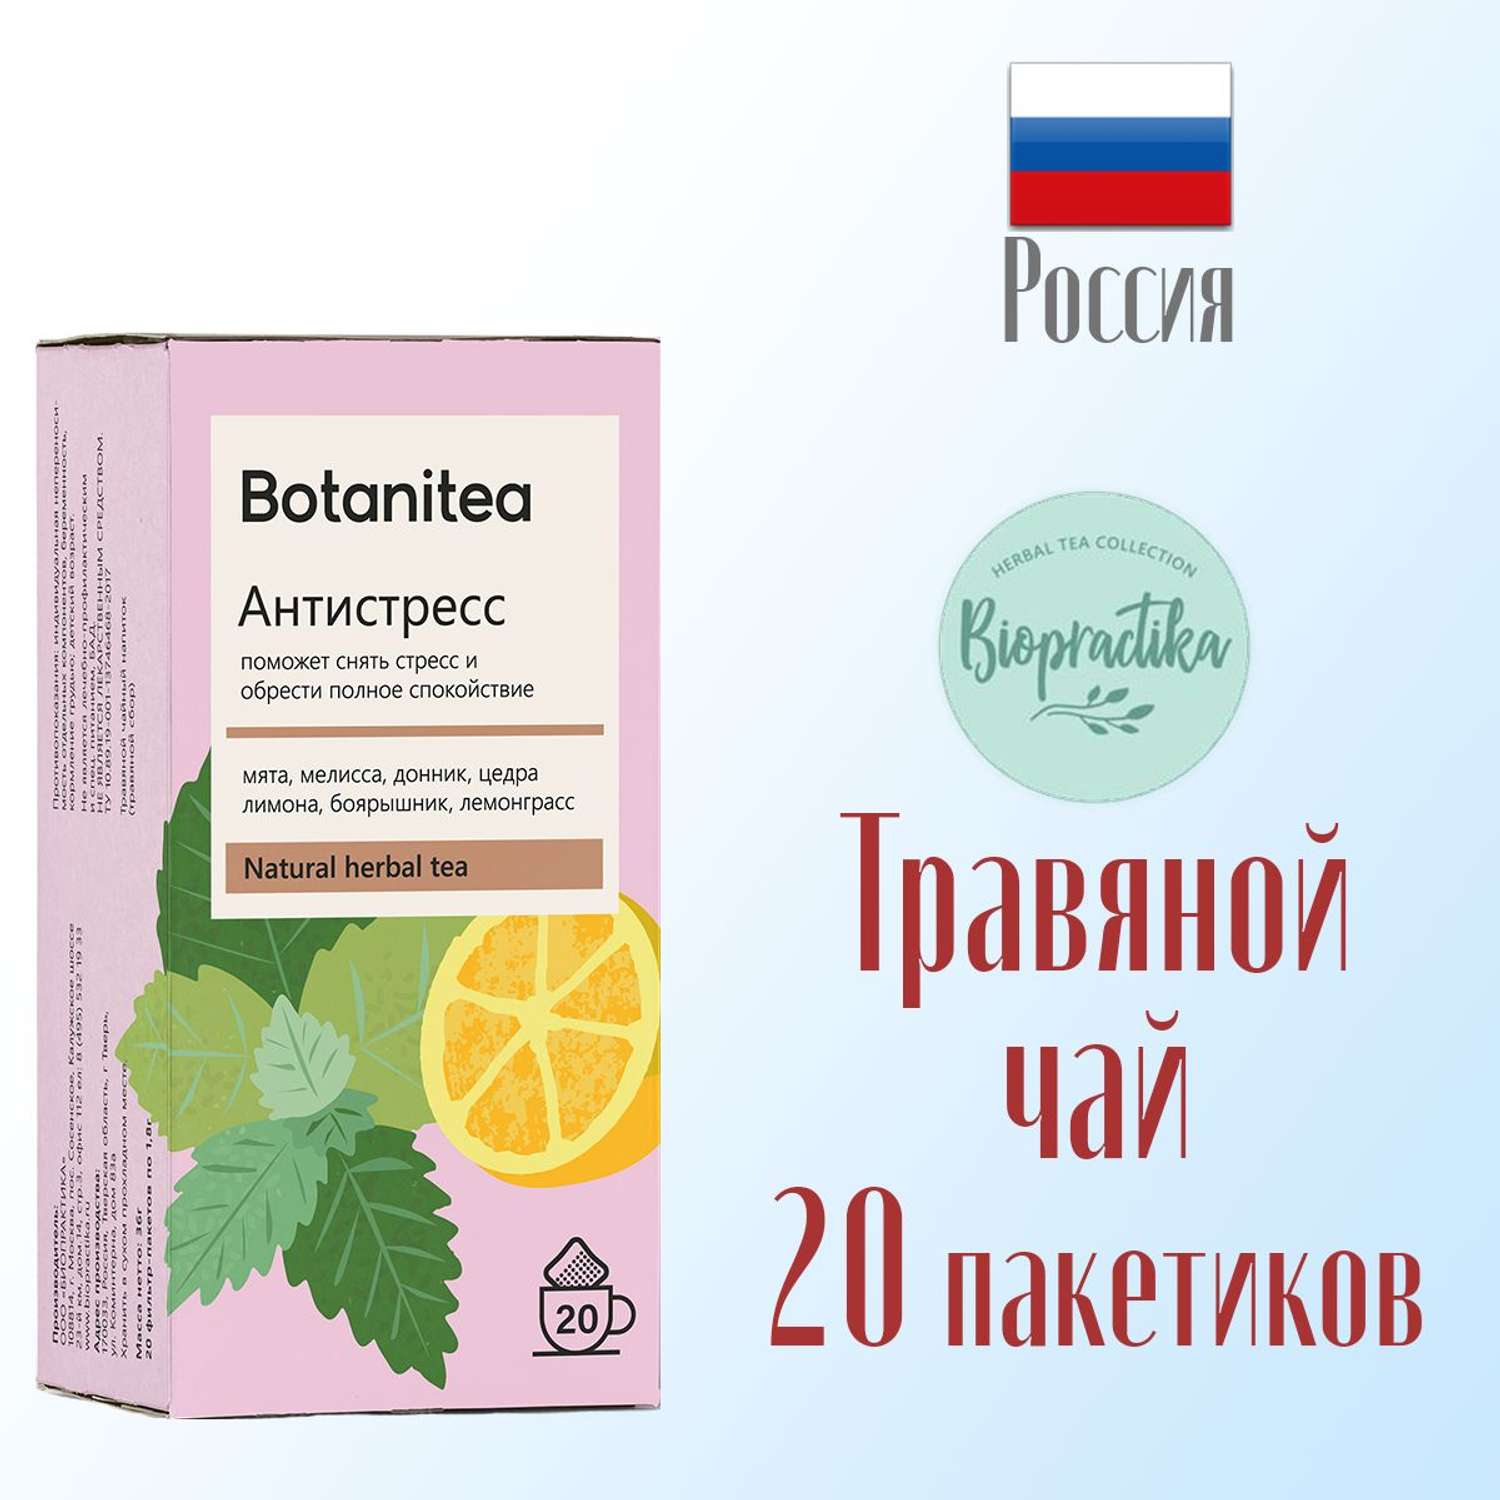 Botanitea. Травяной чай Биопрактика Biopractika botanitea сон. Инструкция травяного чая в пакетиках "botanitea" Иммунити. Чай травяной botanitea Antistress 20*1.8г цены.